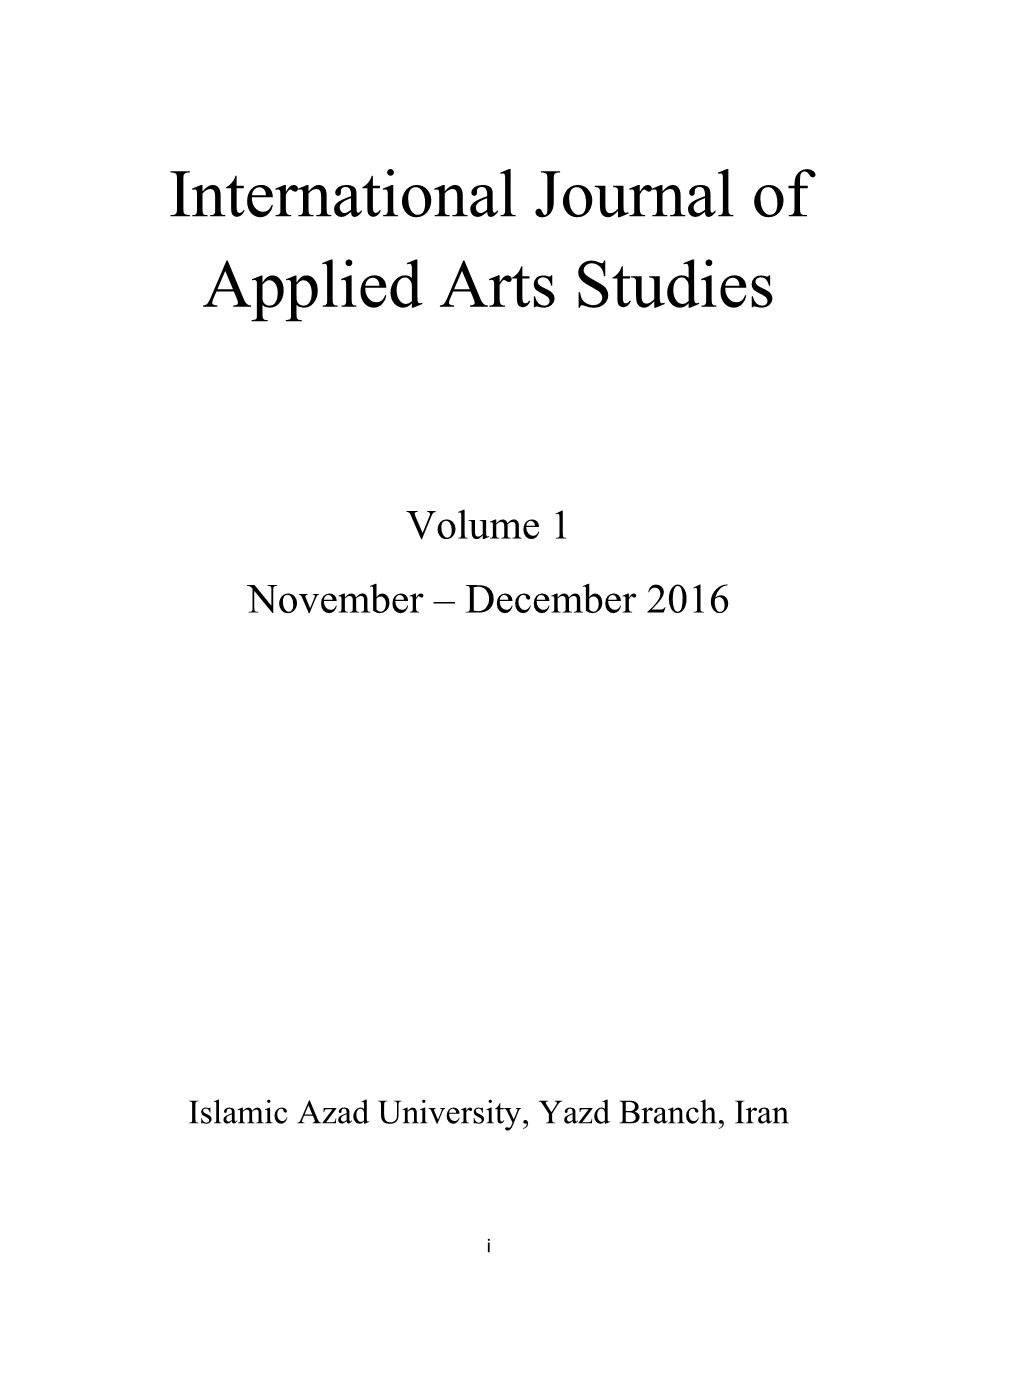 International Journal of Applied Arts Studies